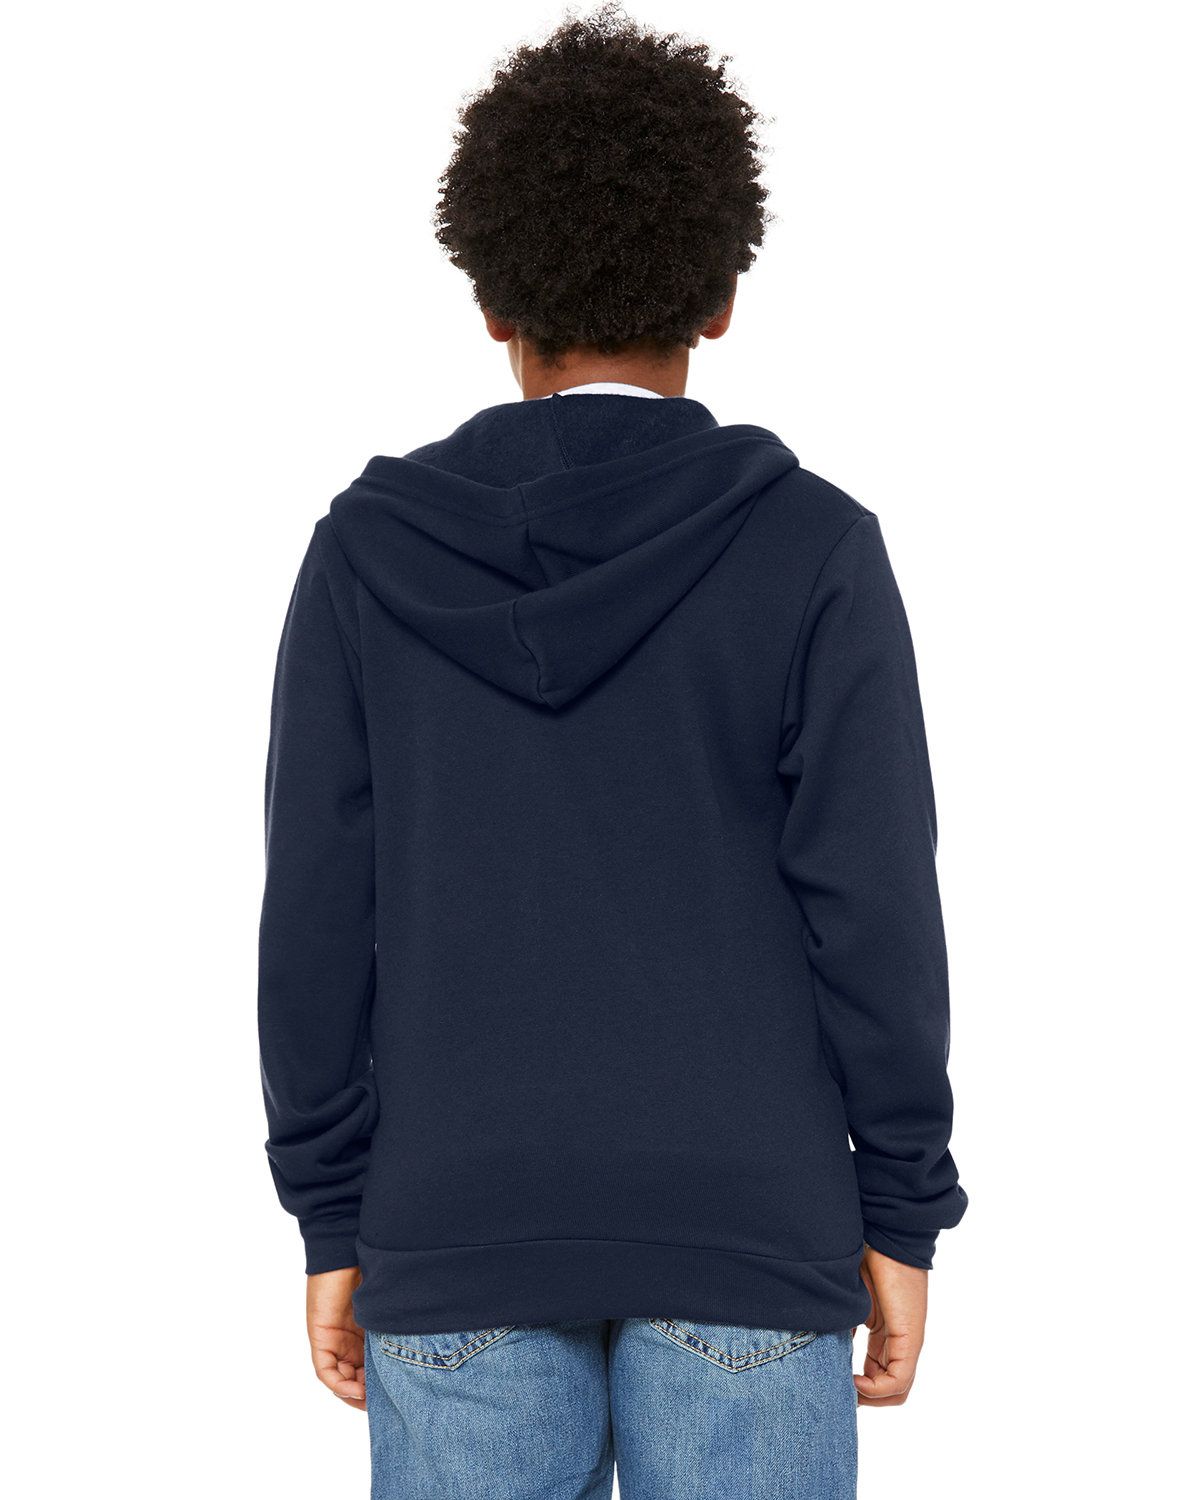 'Bella + Canvas 3739Y Youth Sponge Fleece Full-Zip Hooded Sweatshirt'